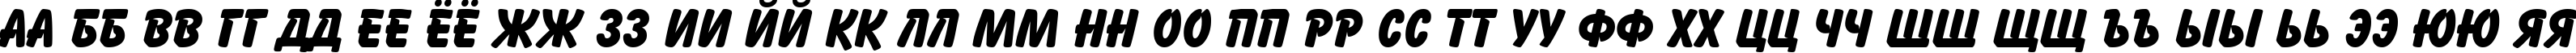 Пример написания русского алфавита шрифтом Balloon Extra Bold TL